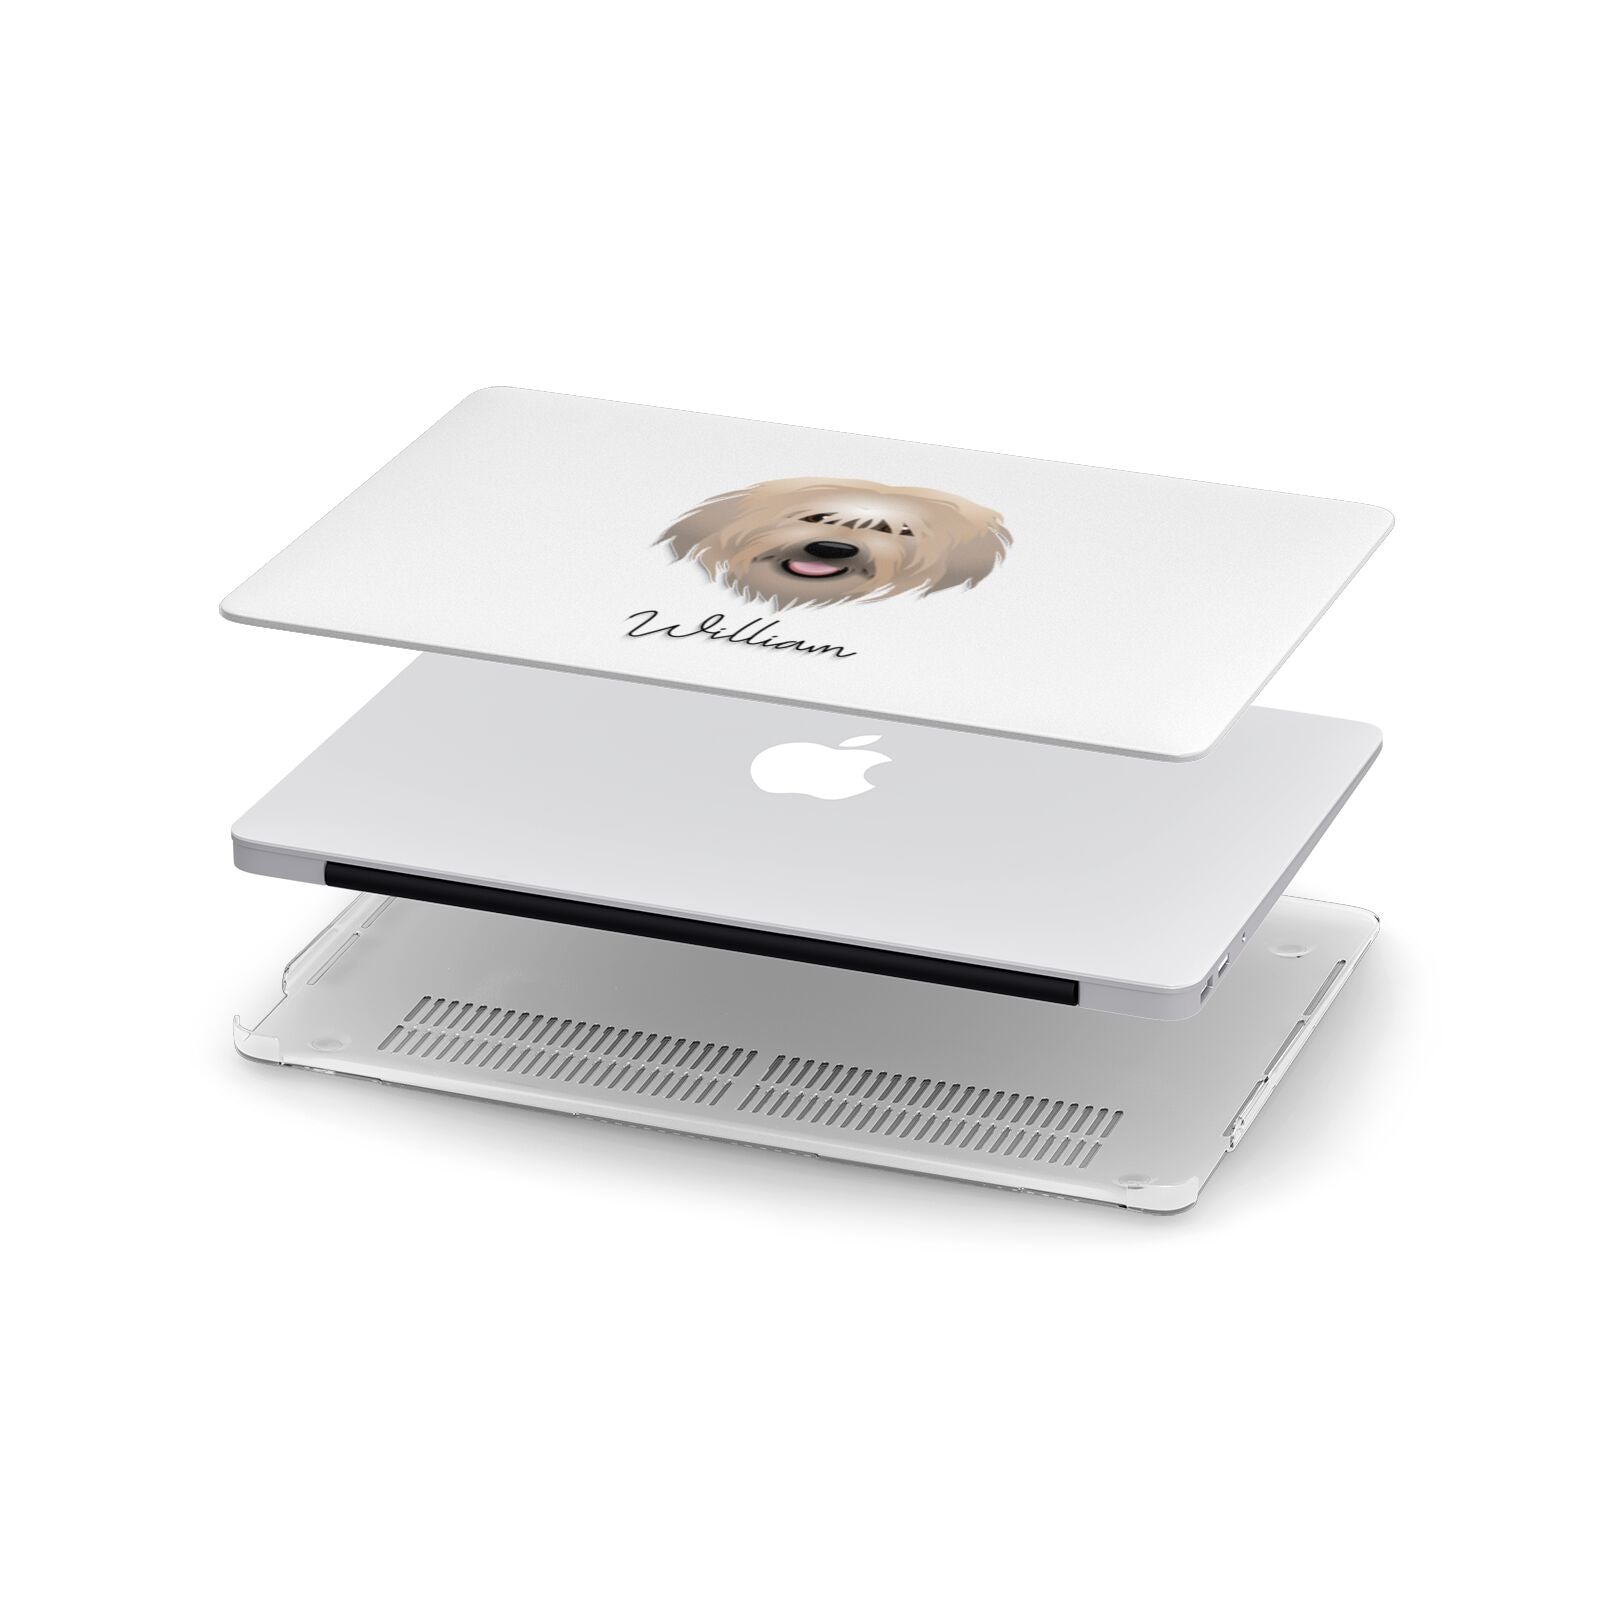 Catalan Sheepdog Personalised Apple MacBook Case in Detail